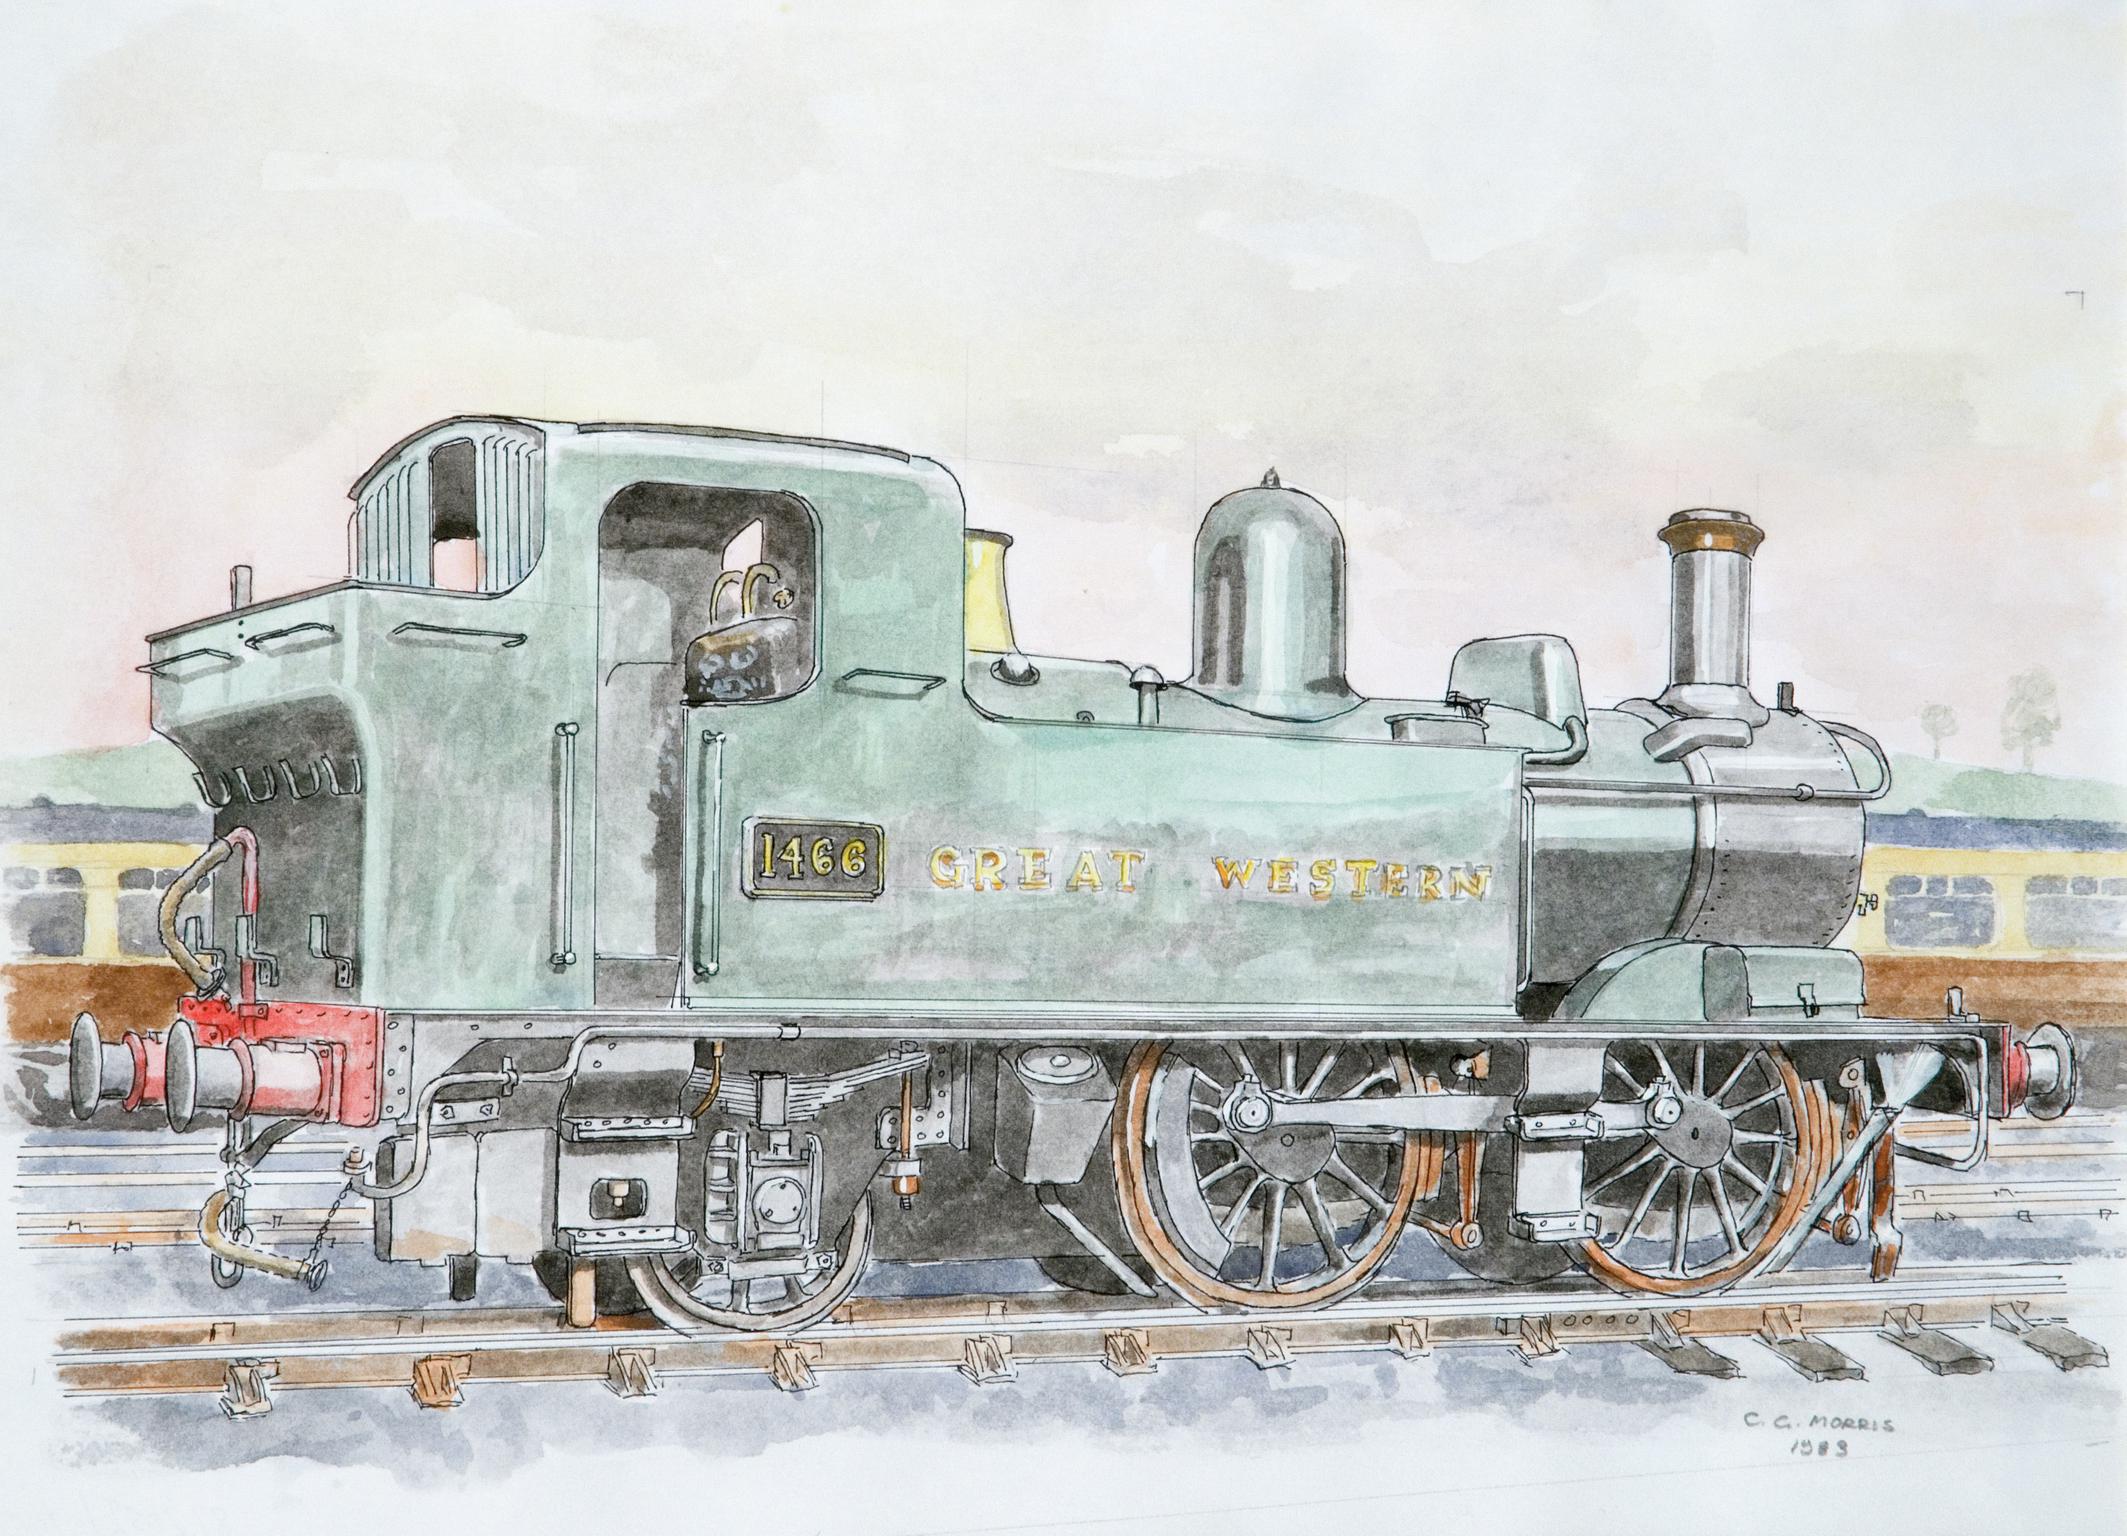 G.W.R. locomotive No. '1466', painting